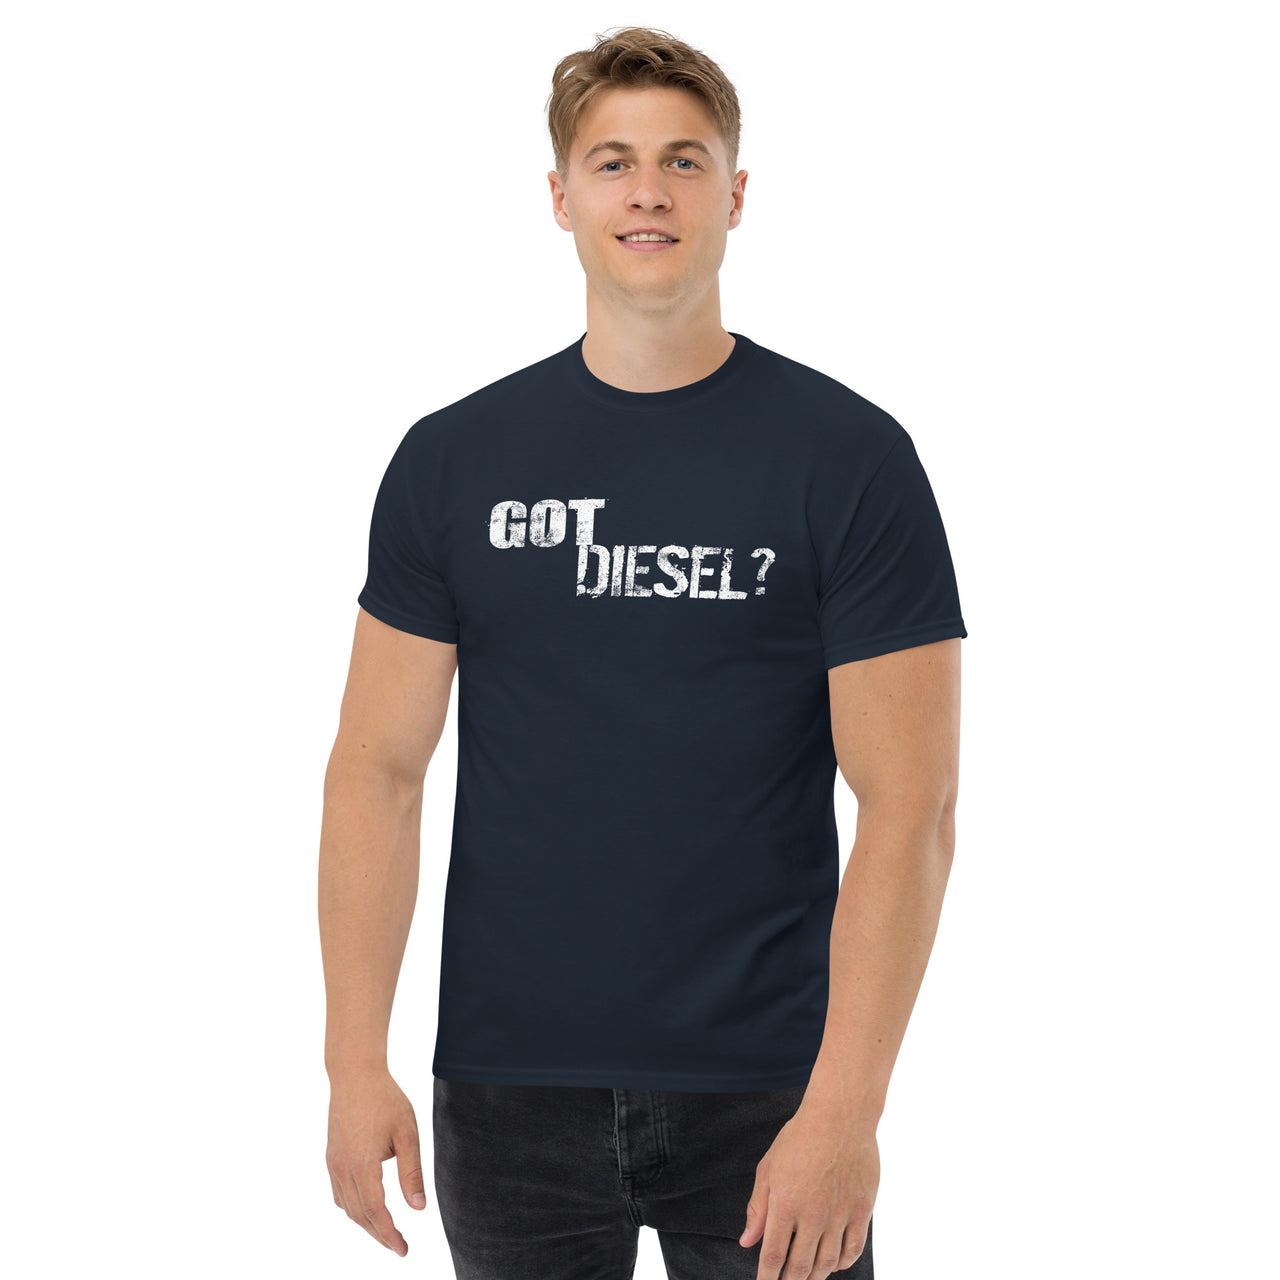 Got Diesel? Truck T-Shirt modeled in navy